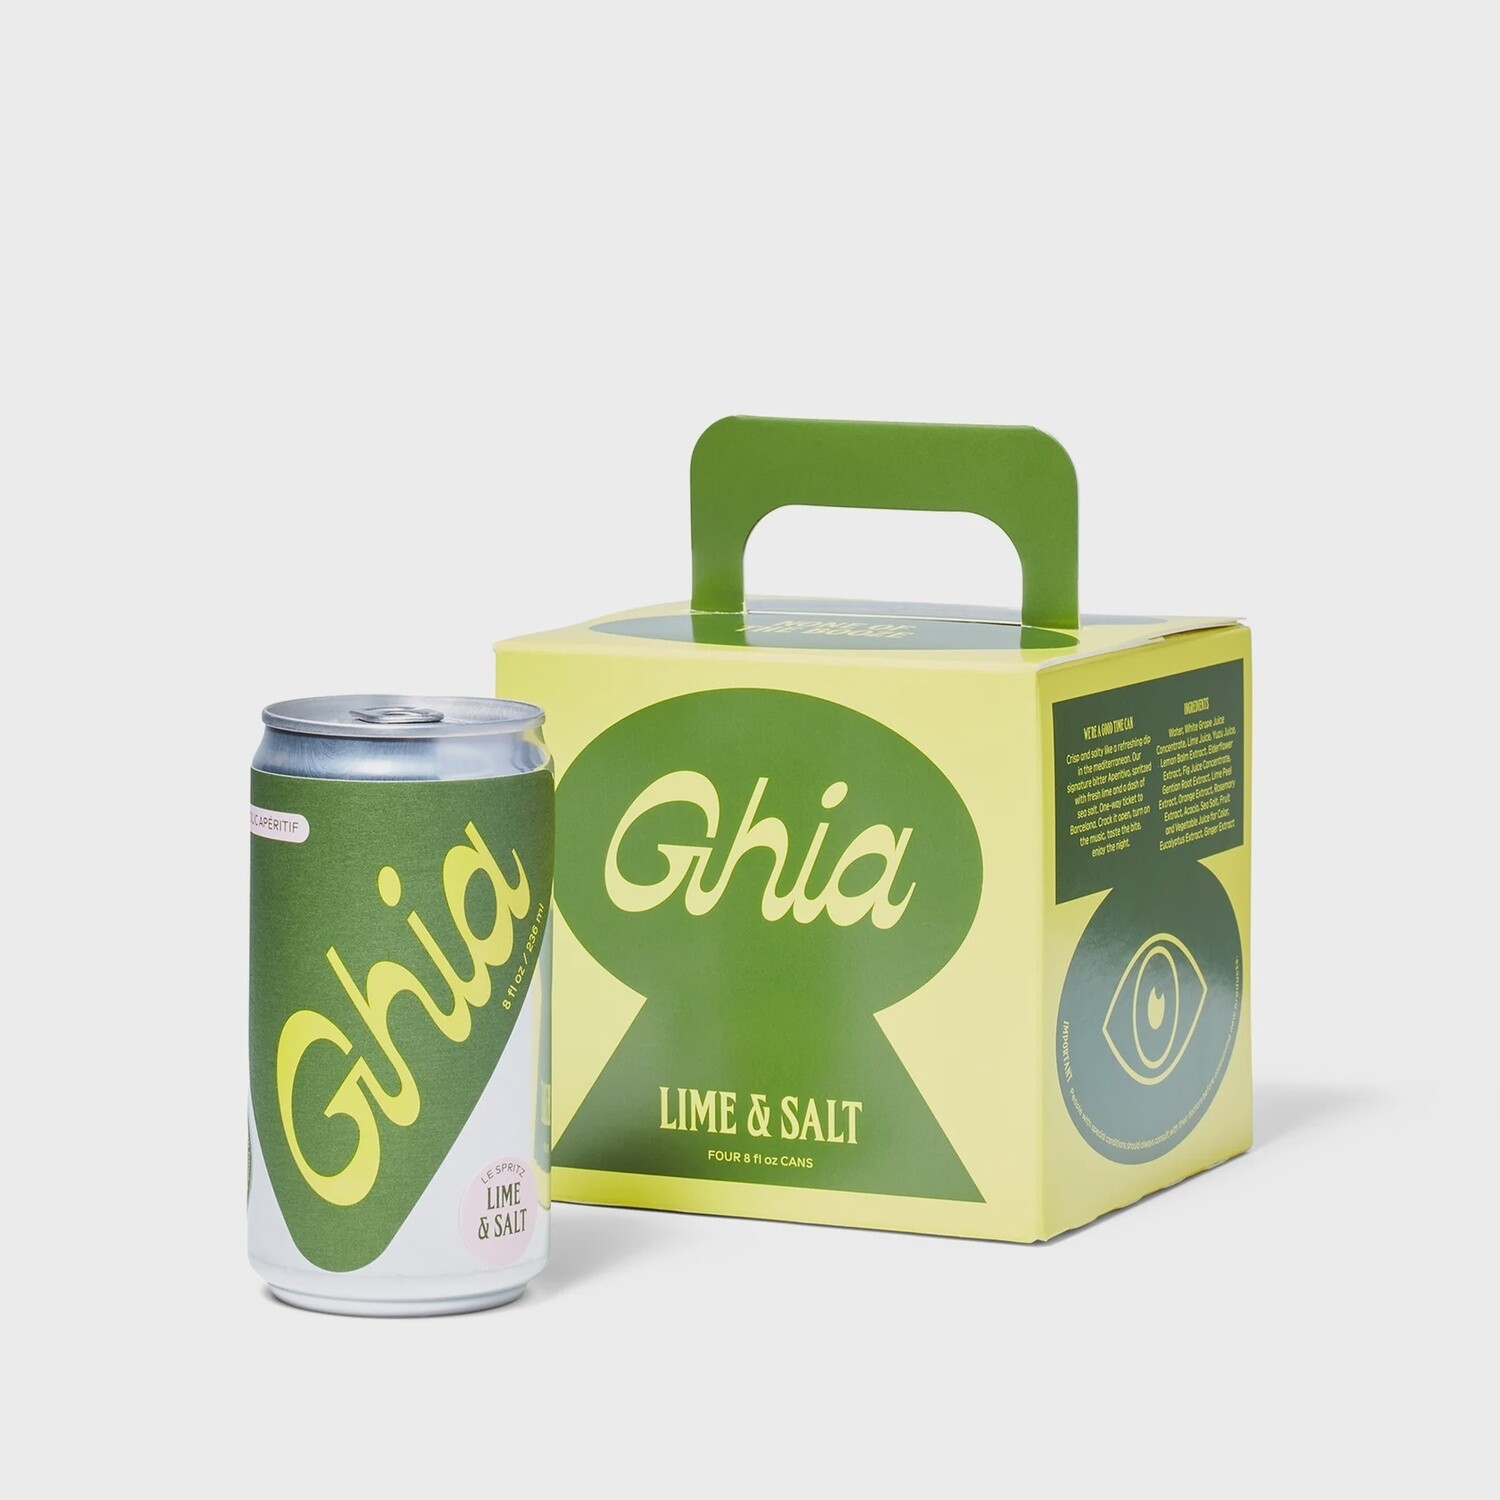 Ghia Lime & Salt Non-Alcoholic